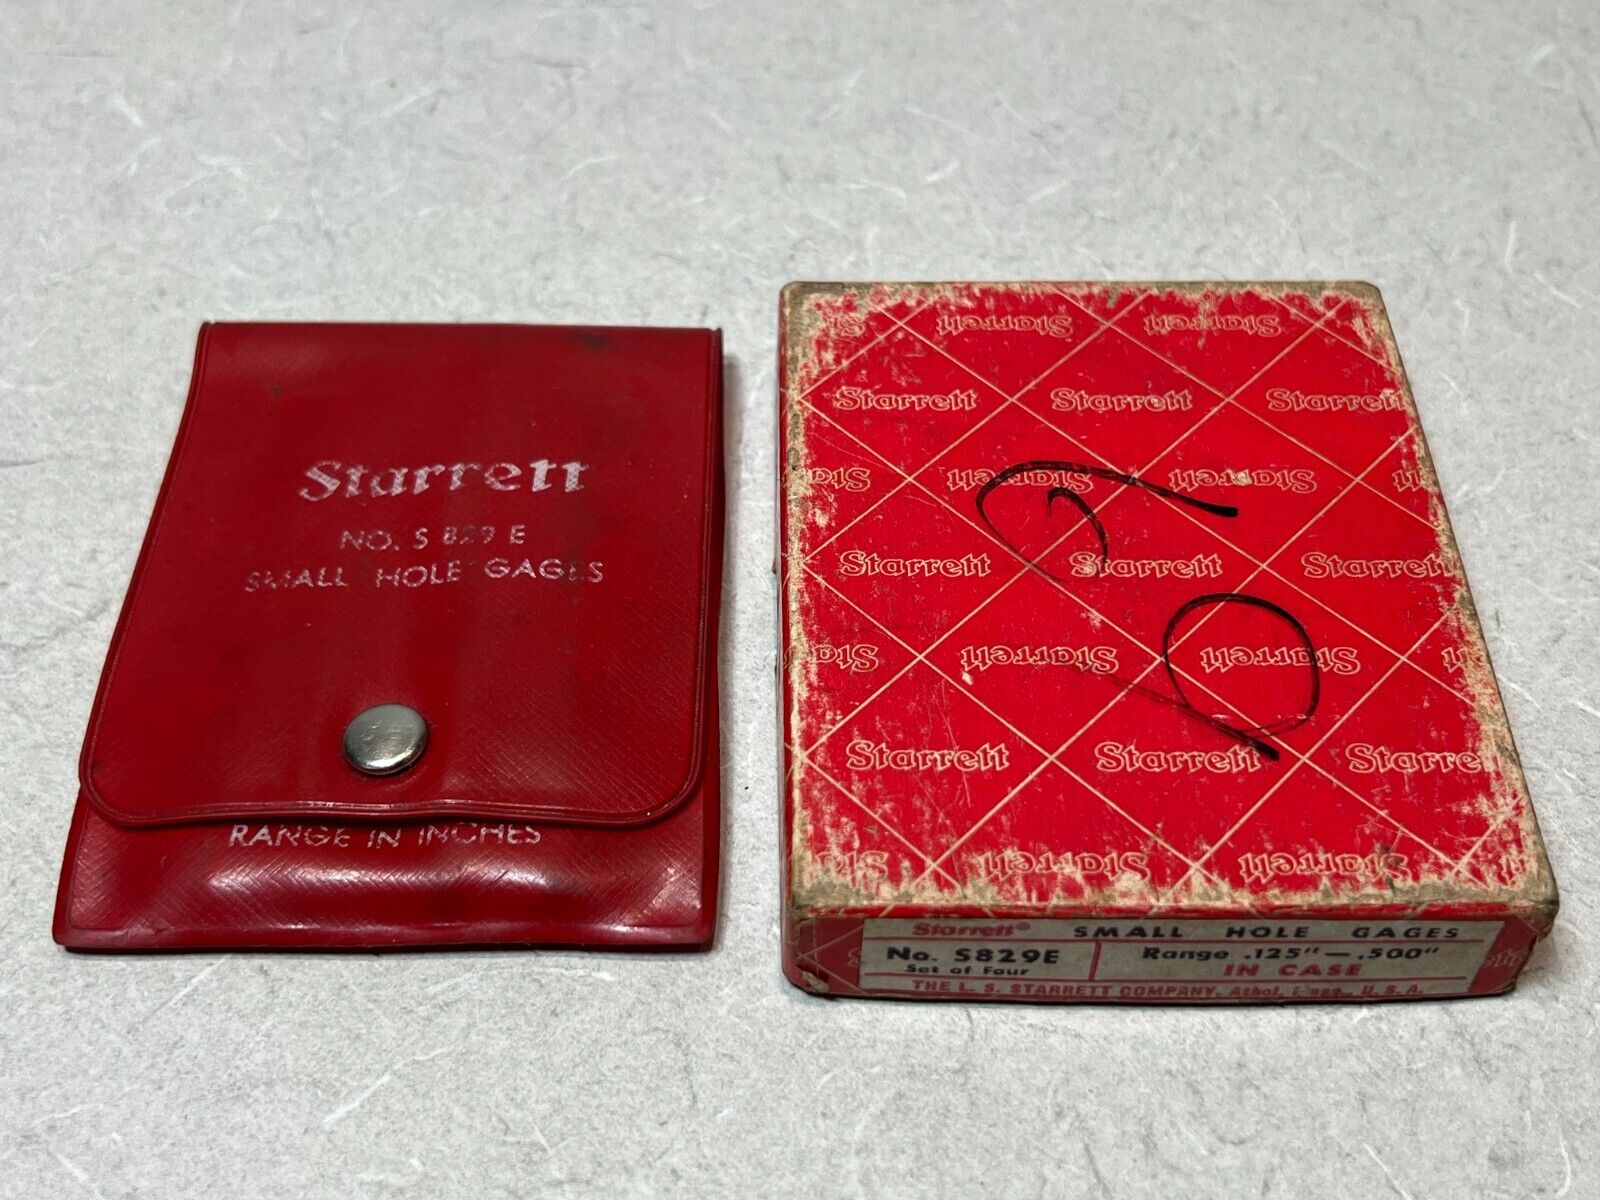 4 Pcs Starrett No S 829 E Small Hole Gages, 829A/B/C/D w Case & BOX, Made in USA